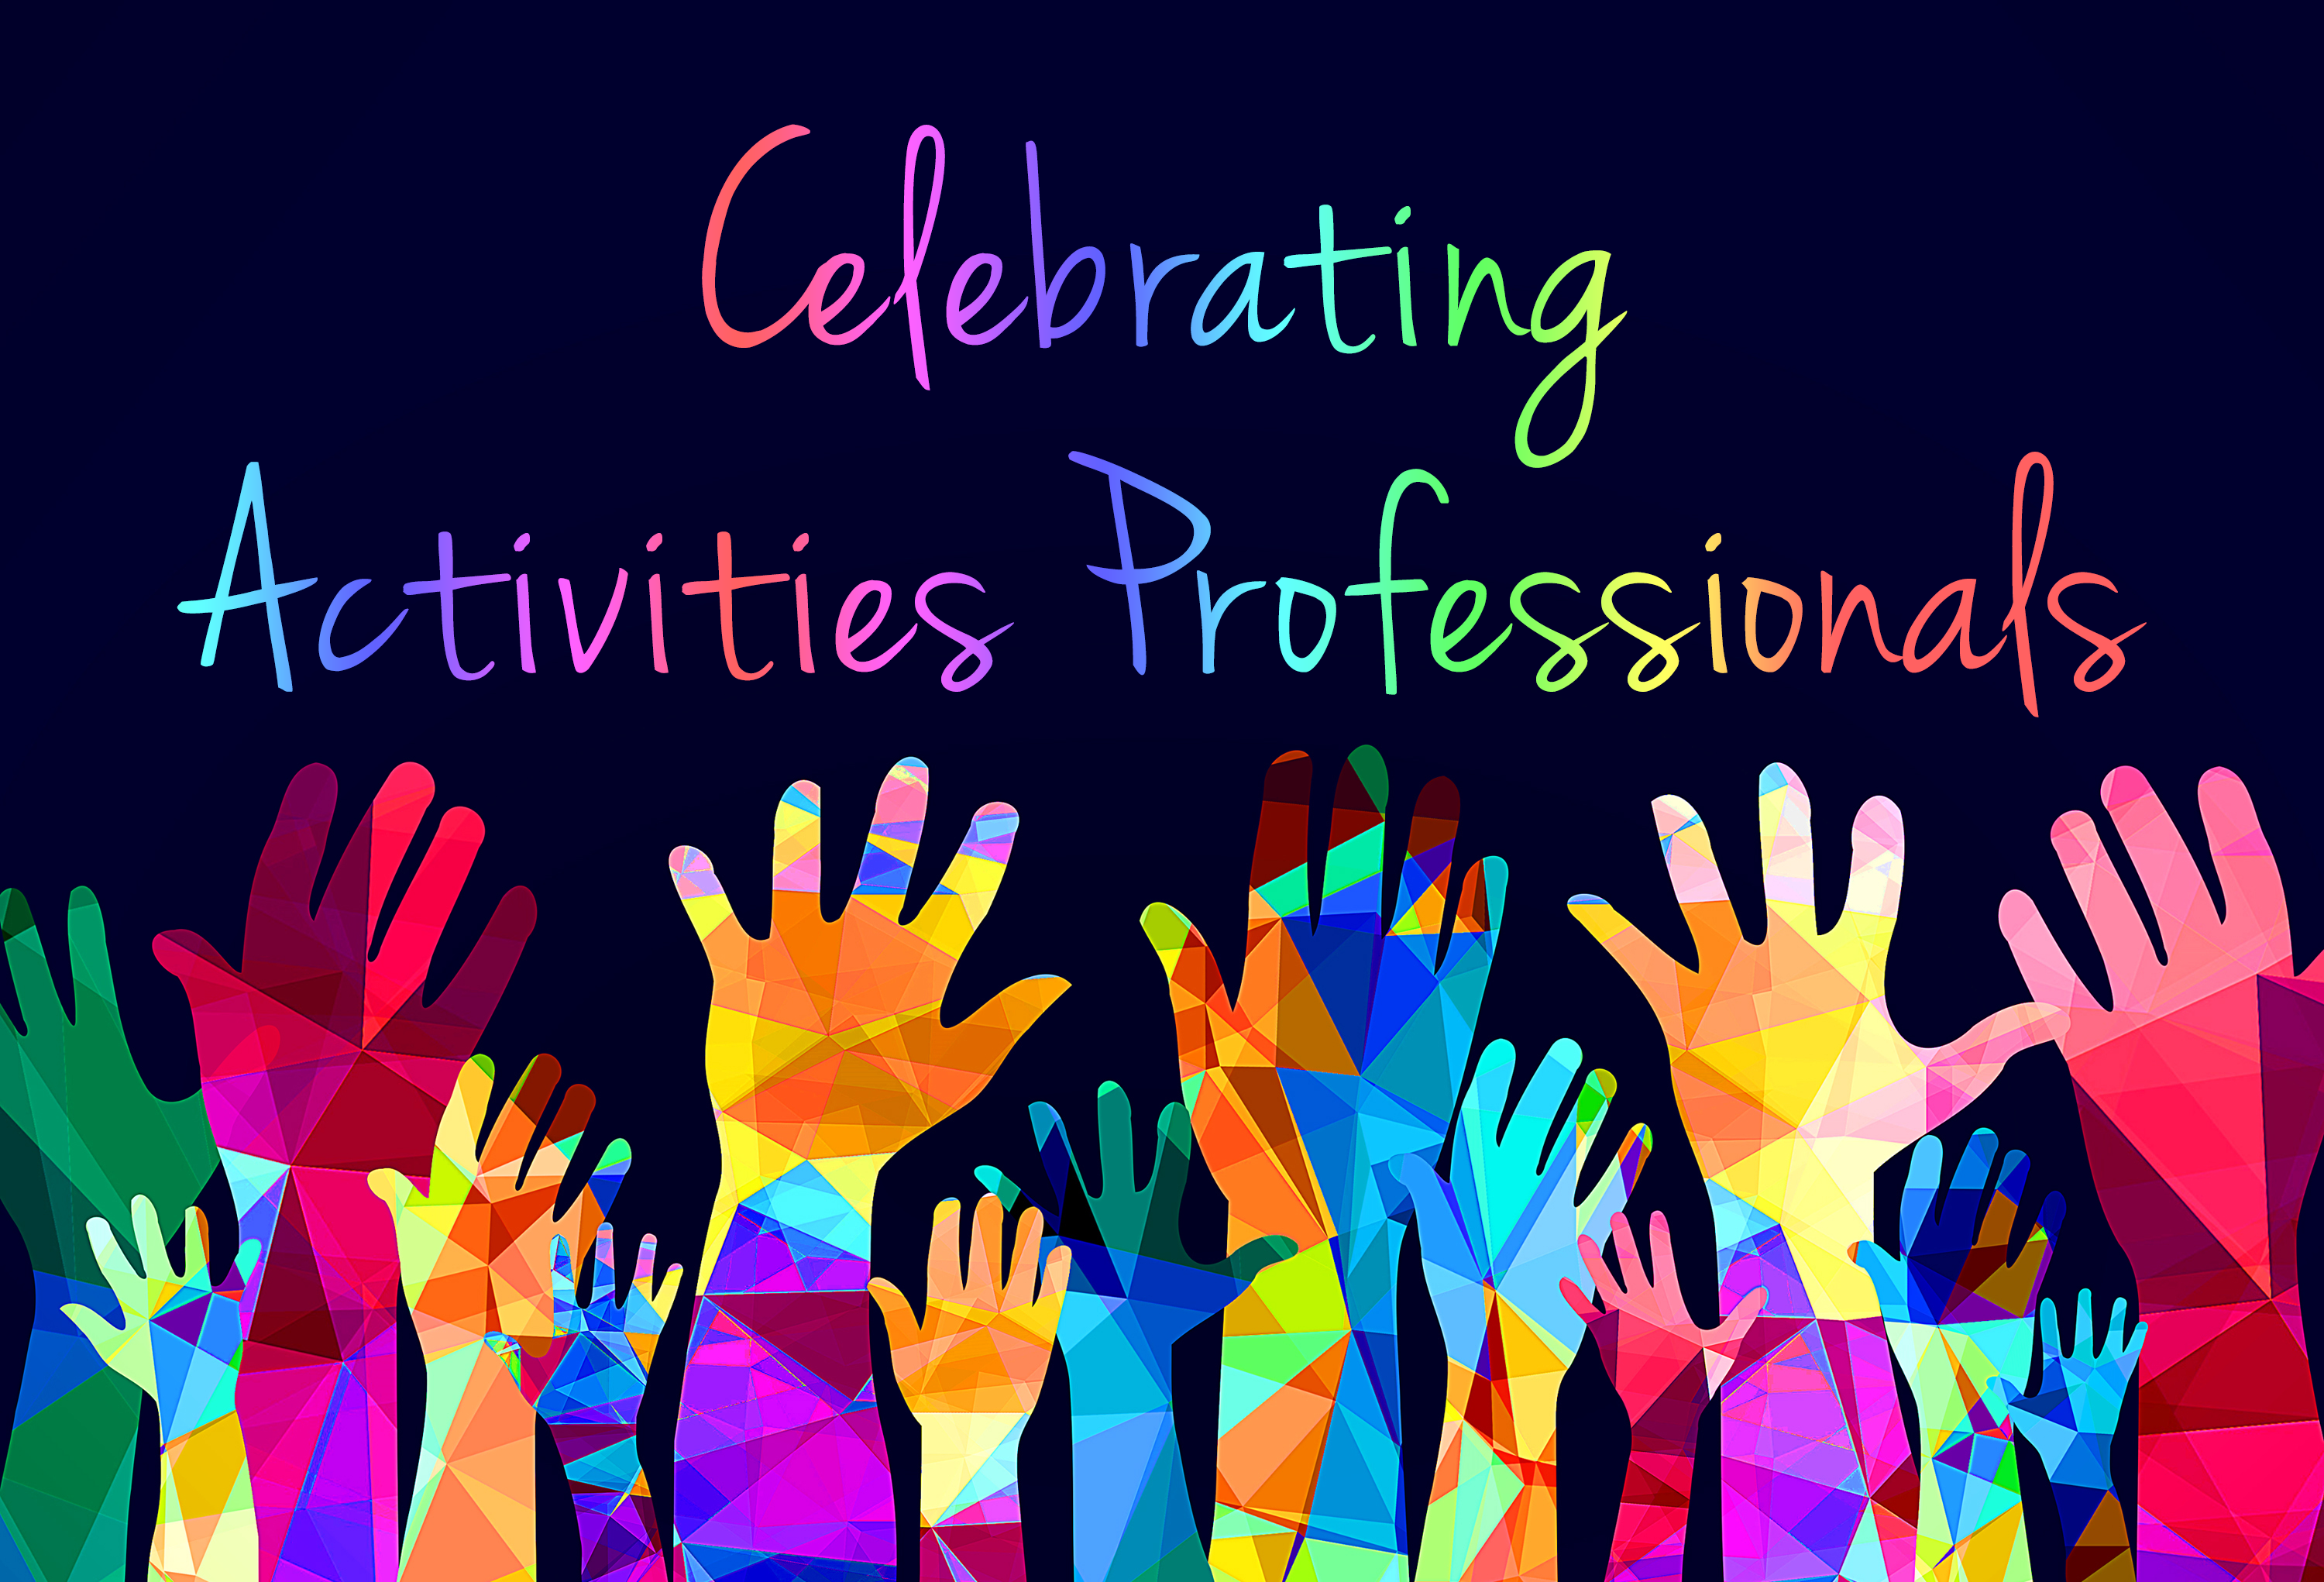 Celebrating Activities Professionals Image Web